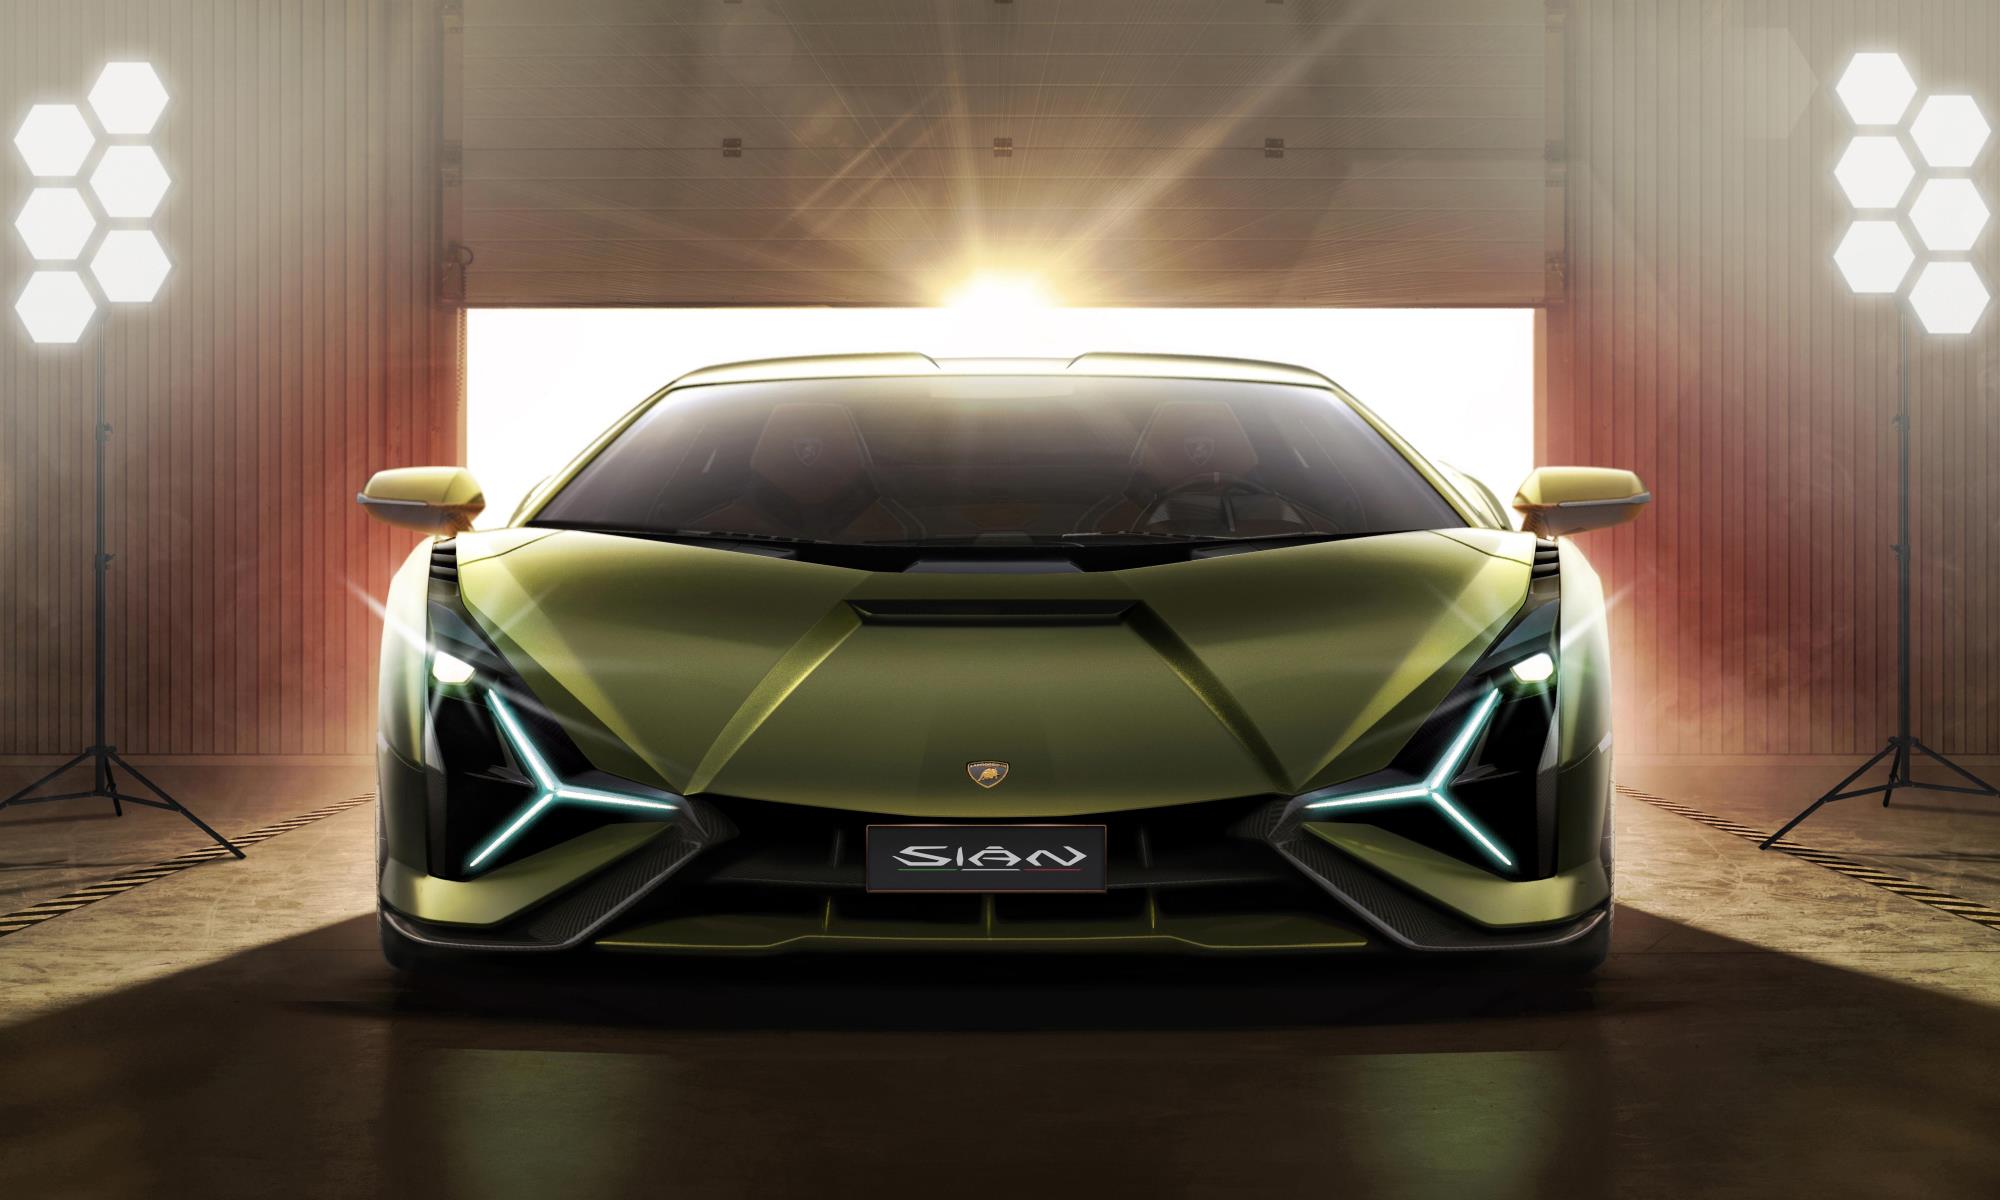 Lamborghini Sian front